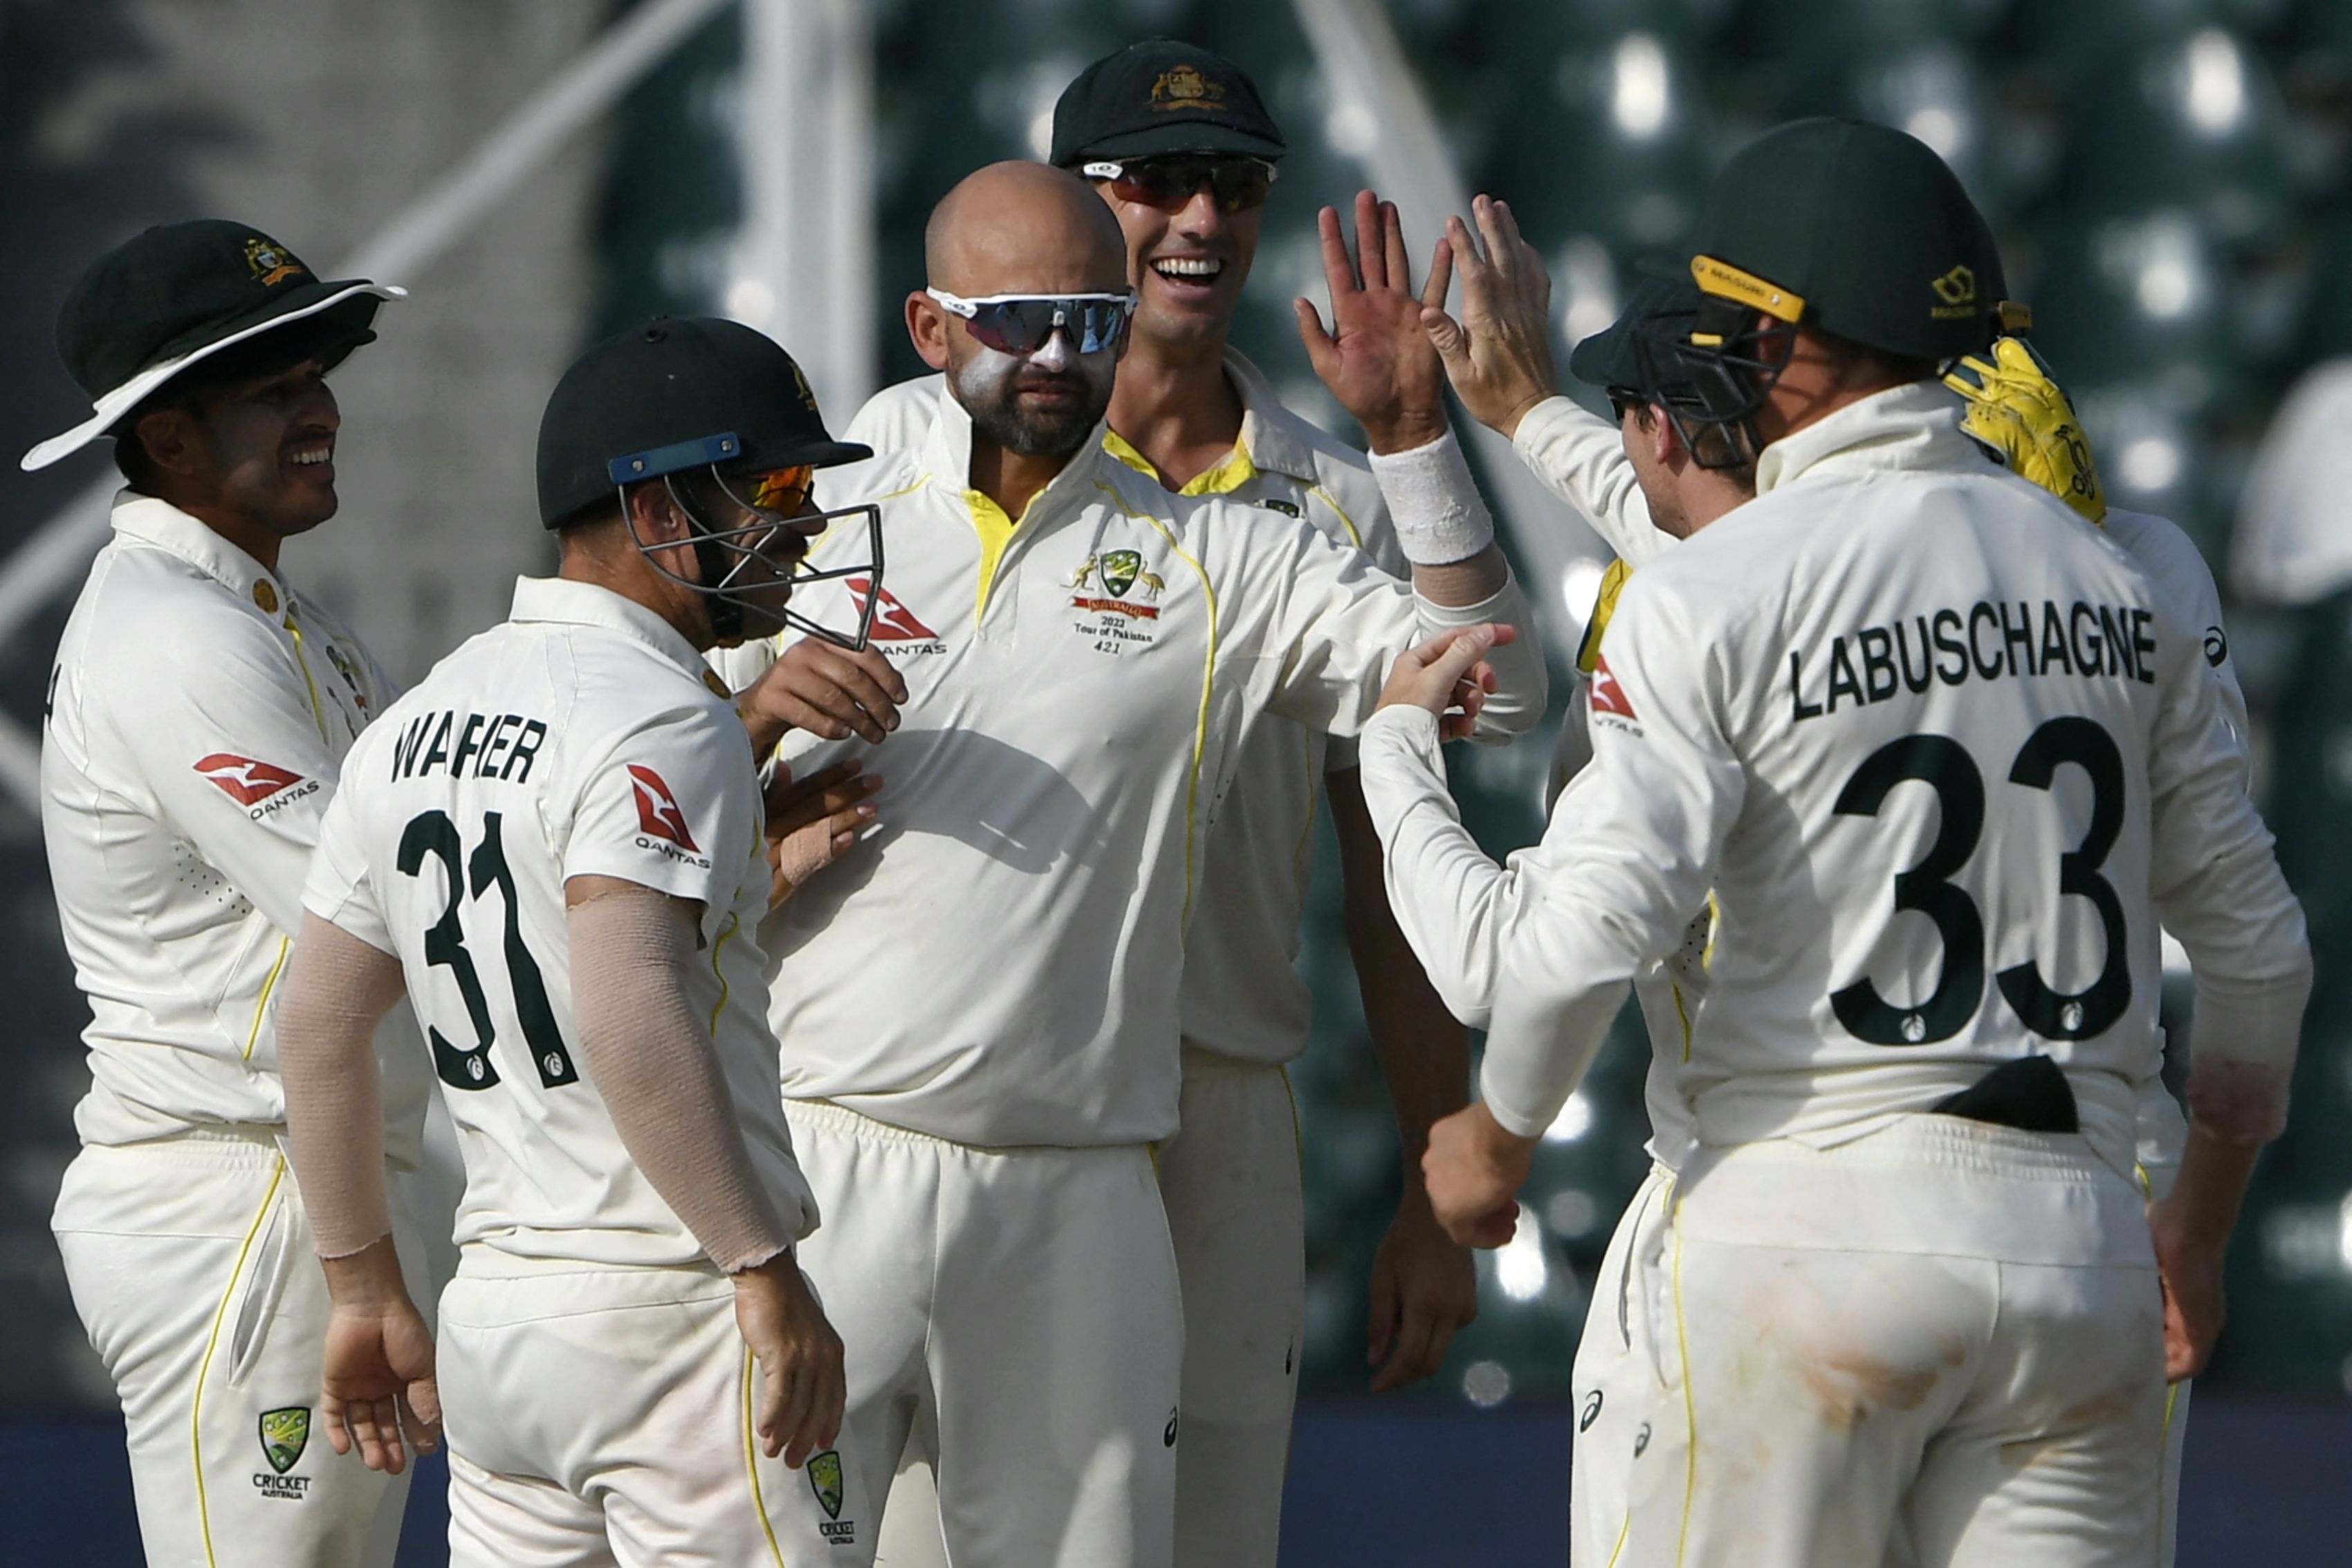 24 साल बाद पाकिस्तान के खिलाफ टेस्ट सीरीज जीती ऑस्ट्रेलिया, नाथन लियोन ने झटका 5-विकेट हॉल